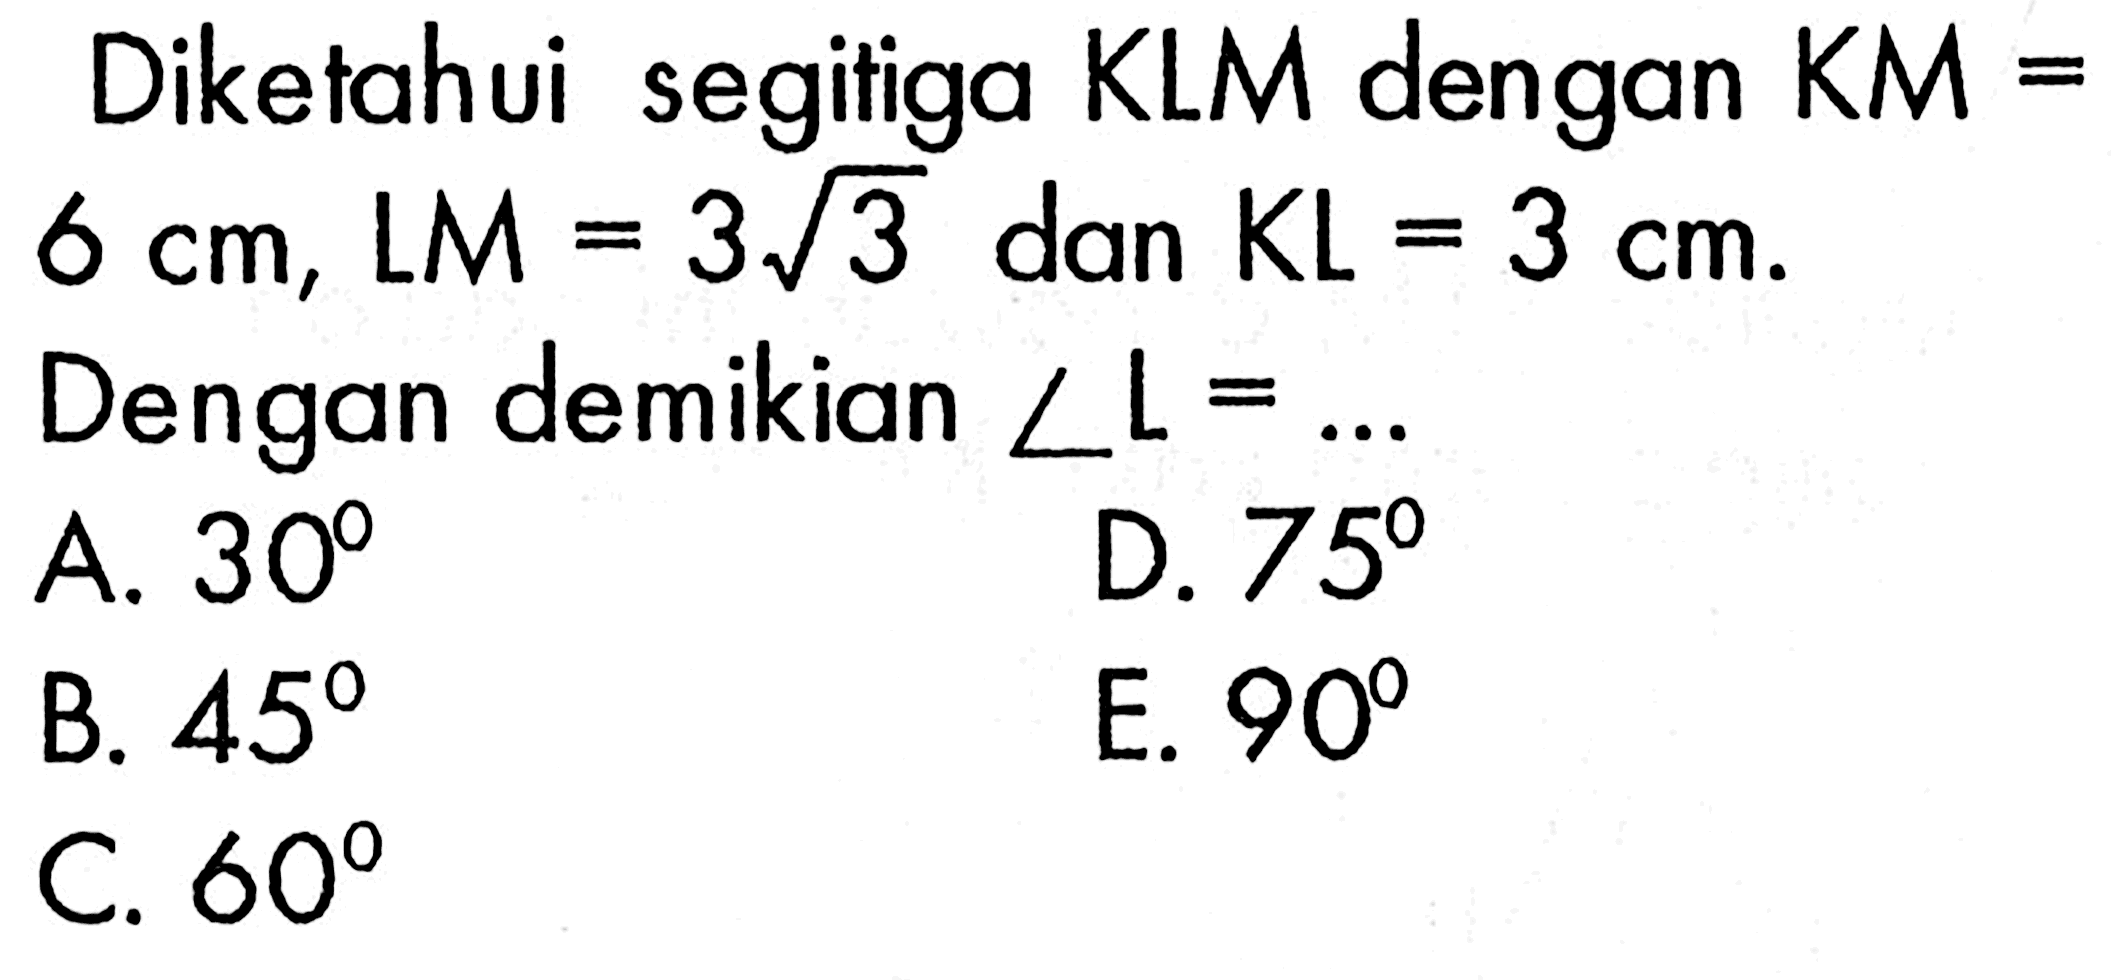 Diketahui segitiga KLM  dengan KM=6 cm, LM=3 akar(3) dan KL=3 cm. Dengan demikian sudut L=.... 